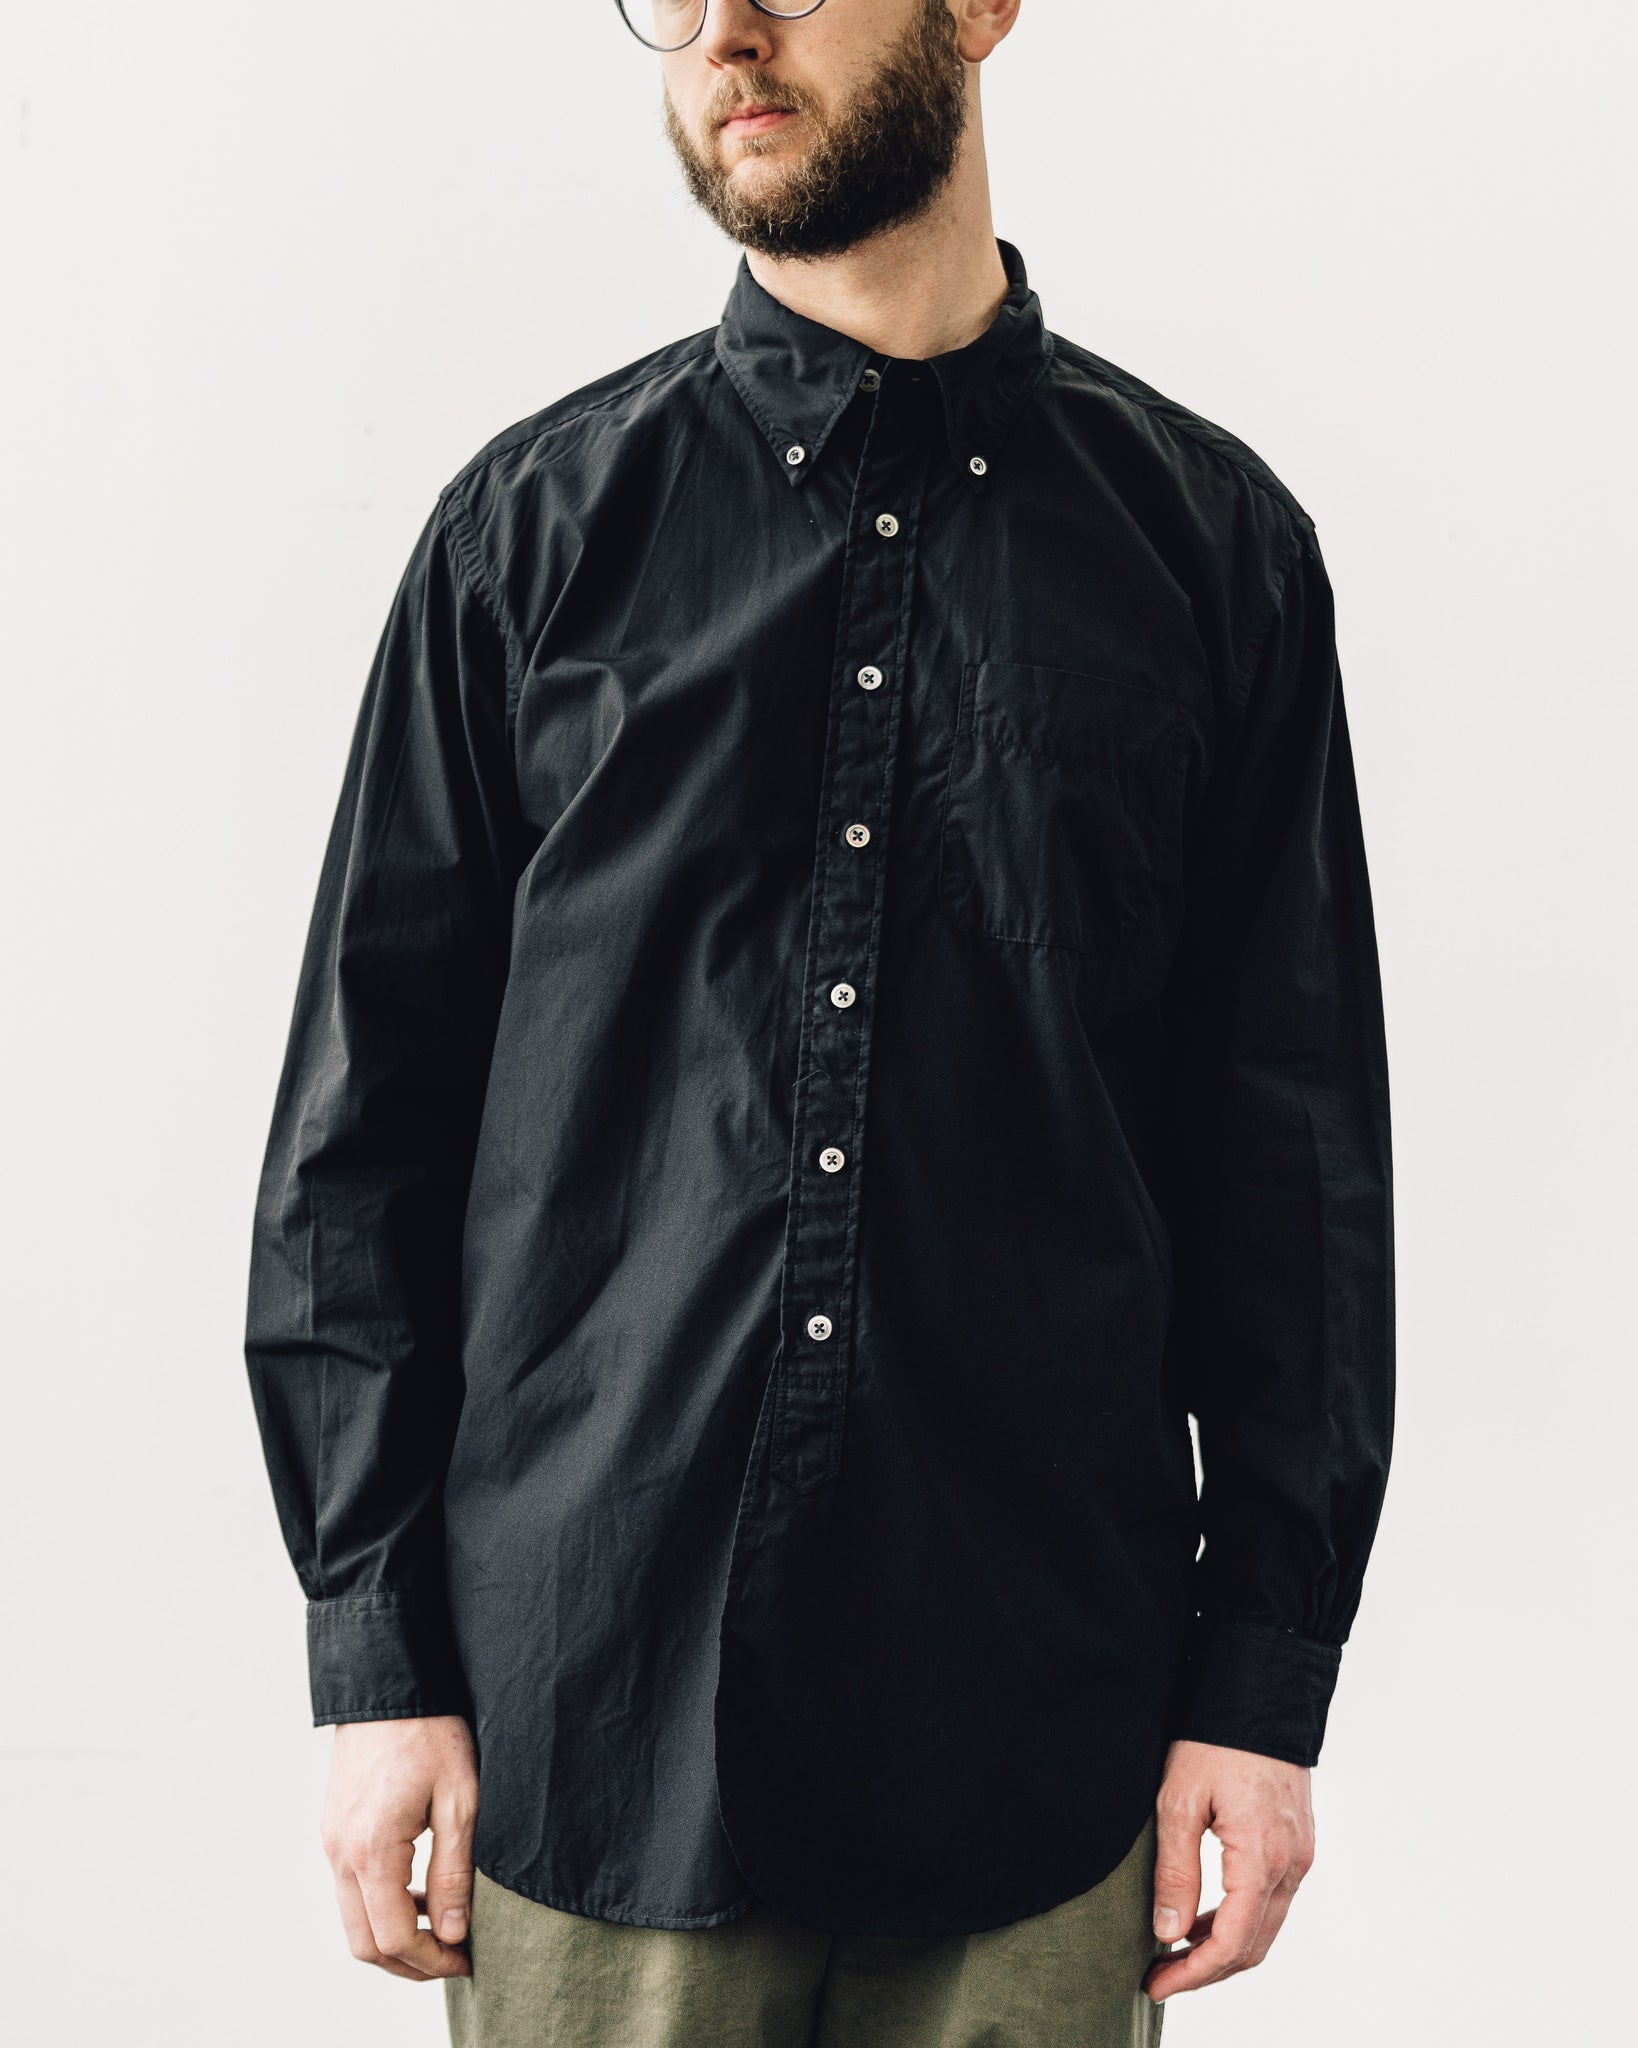 Engineered Garments th Century BD Shirt, Black   Glasswing